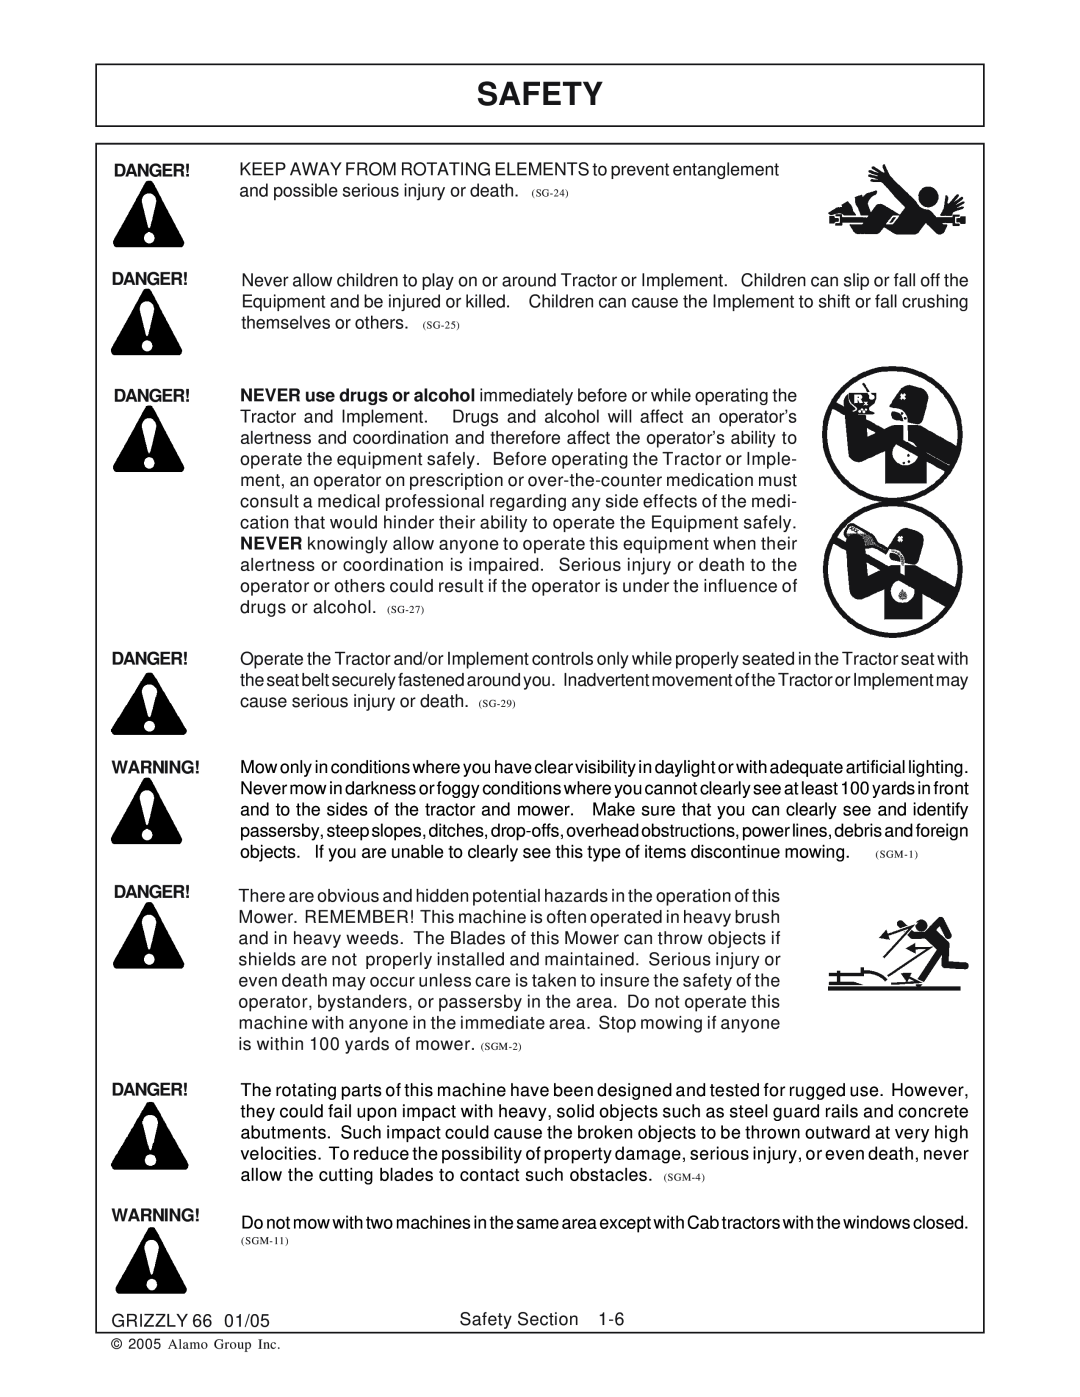 Alamo 66 manual Safety, Danger Danger Danger 